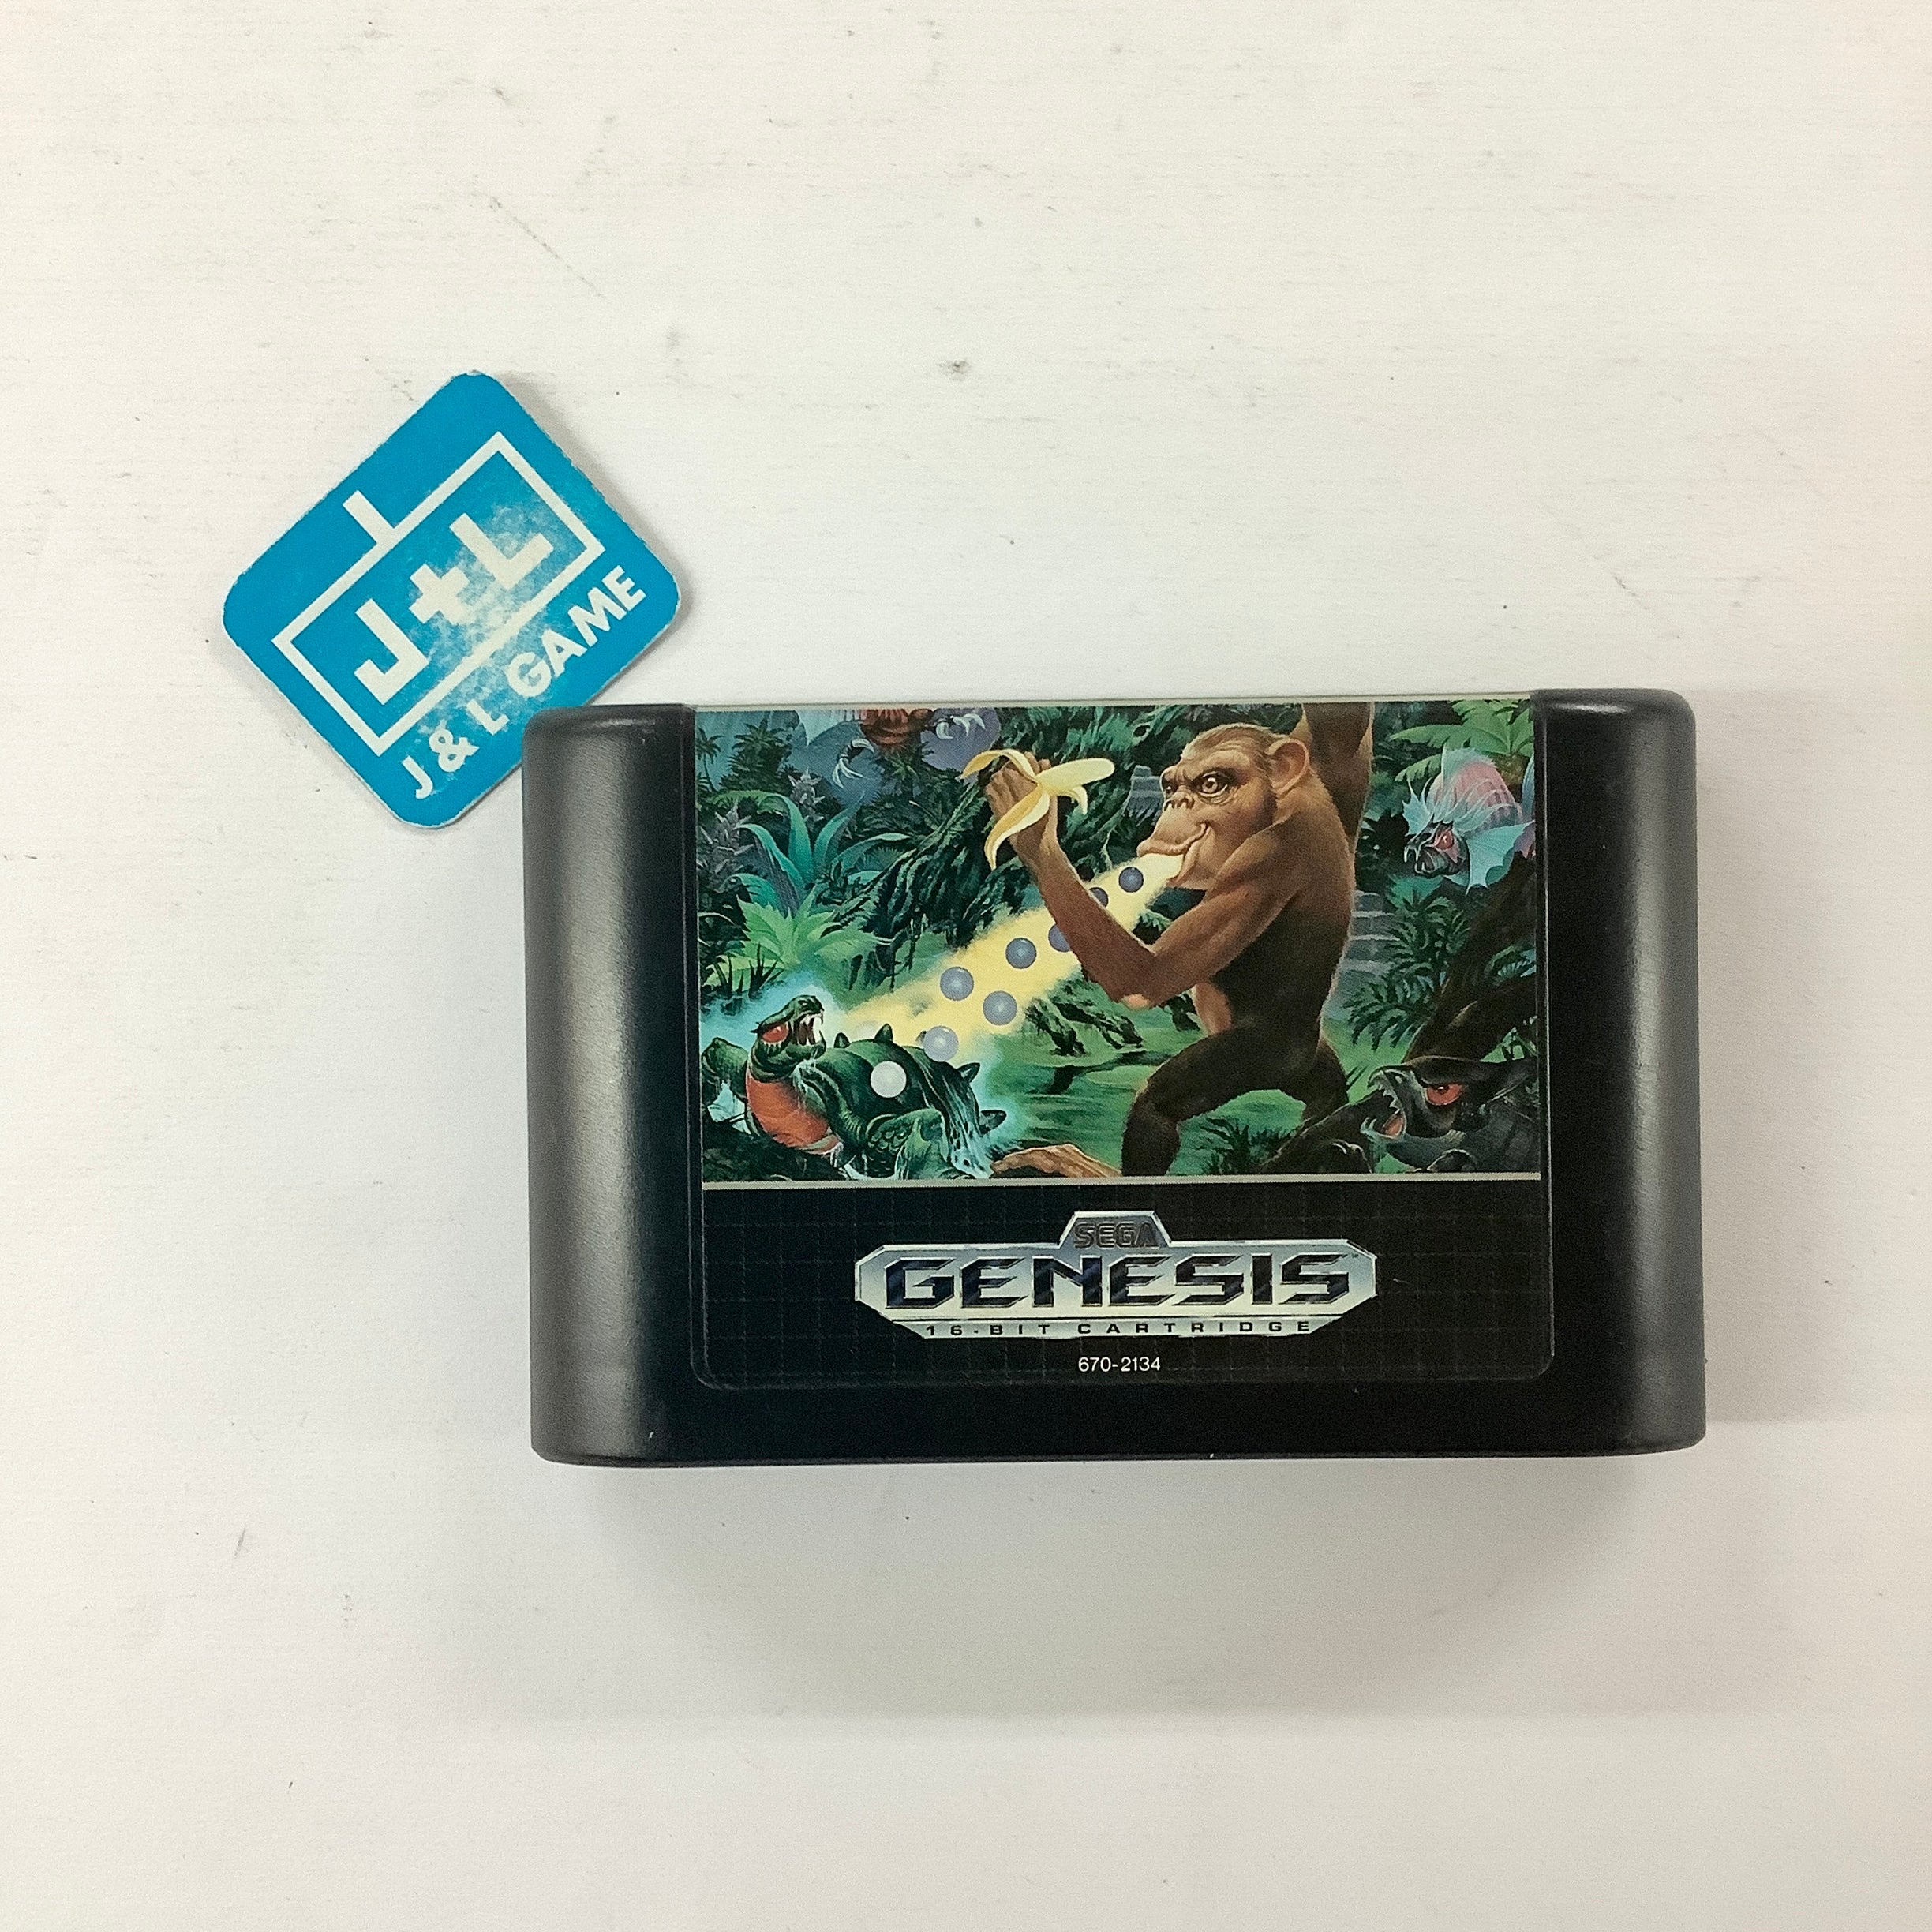 Toki: Going Ape Spit - (SG) SEGA Genesis [Pre-Owned] Video Games Sega   